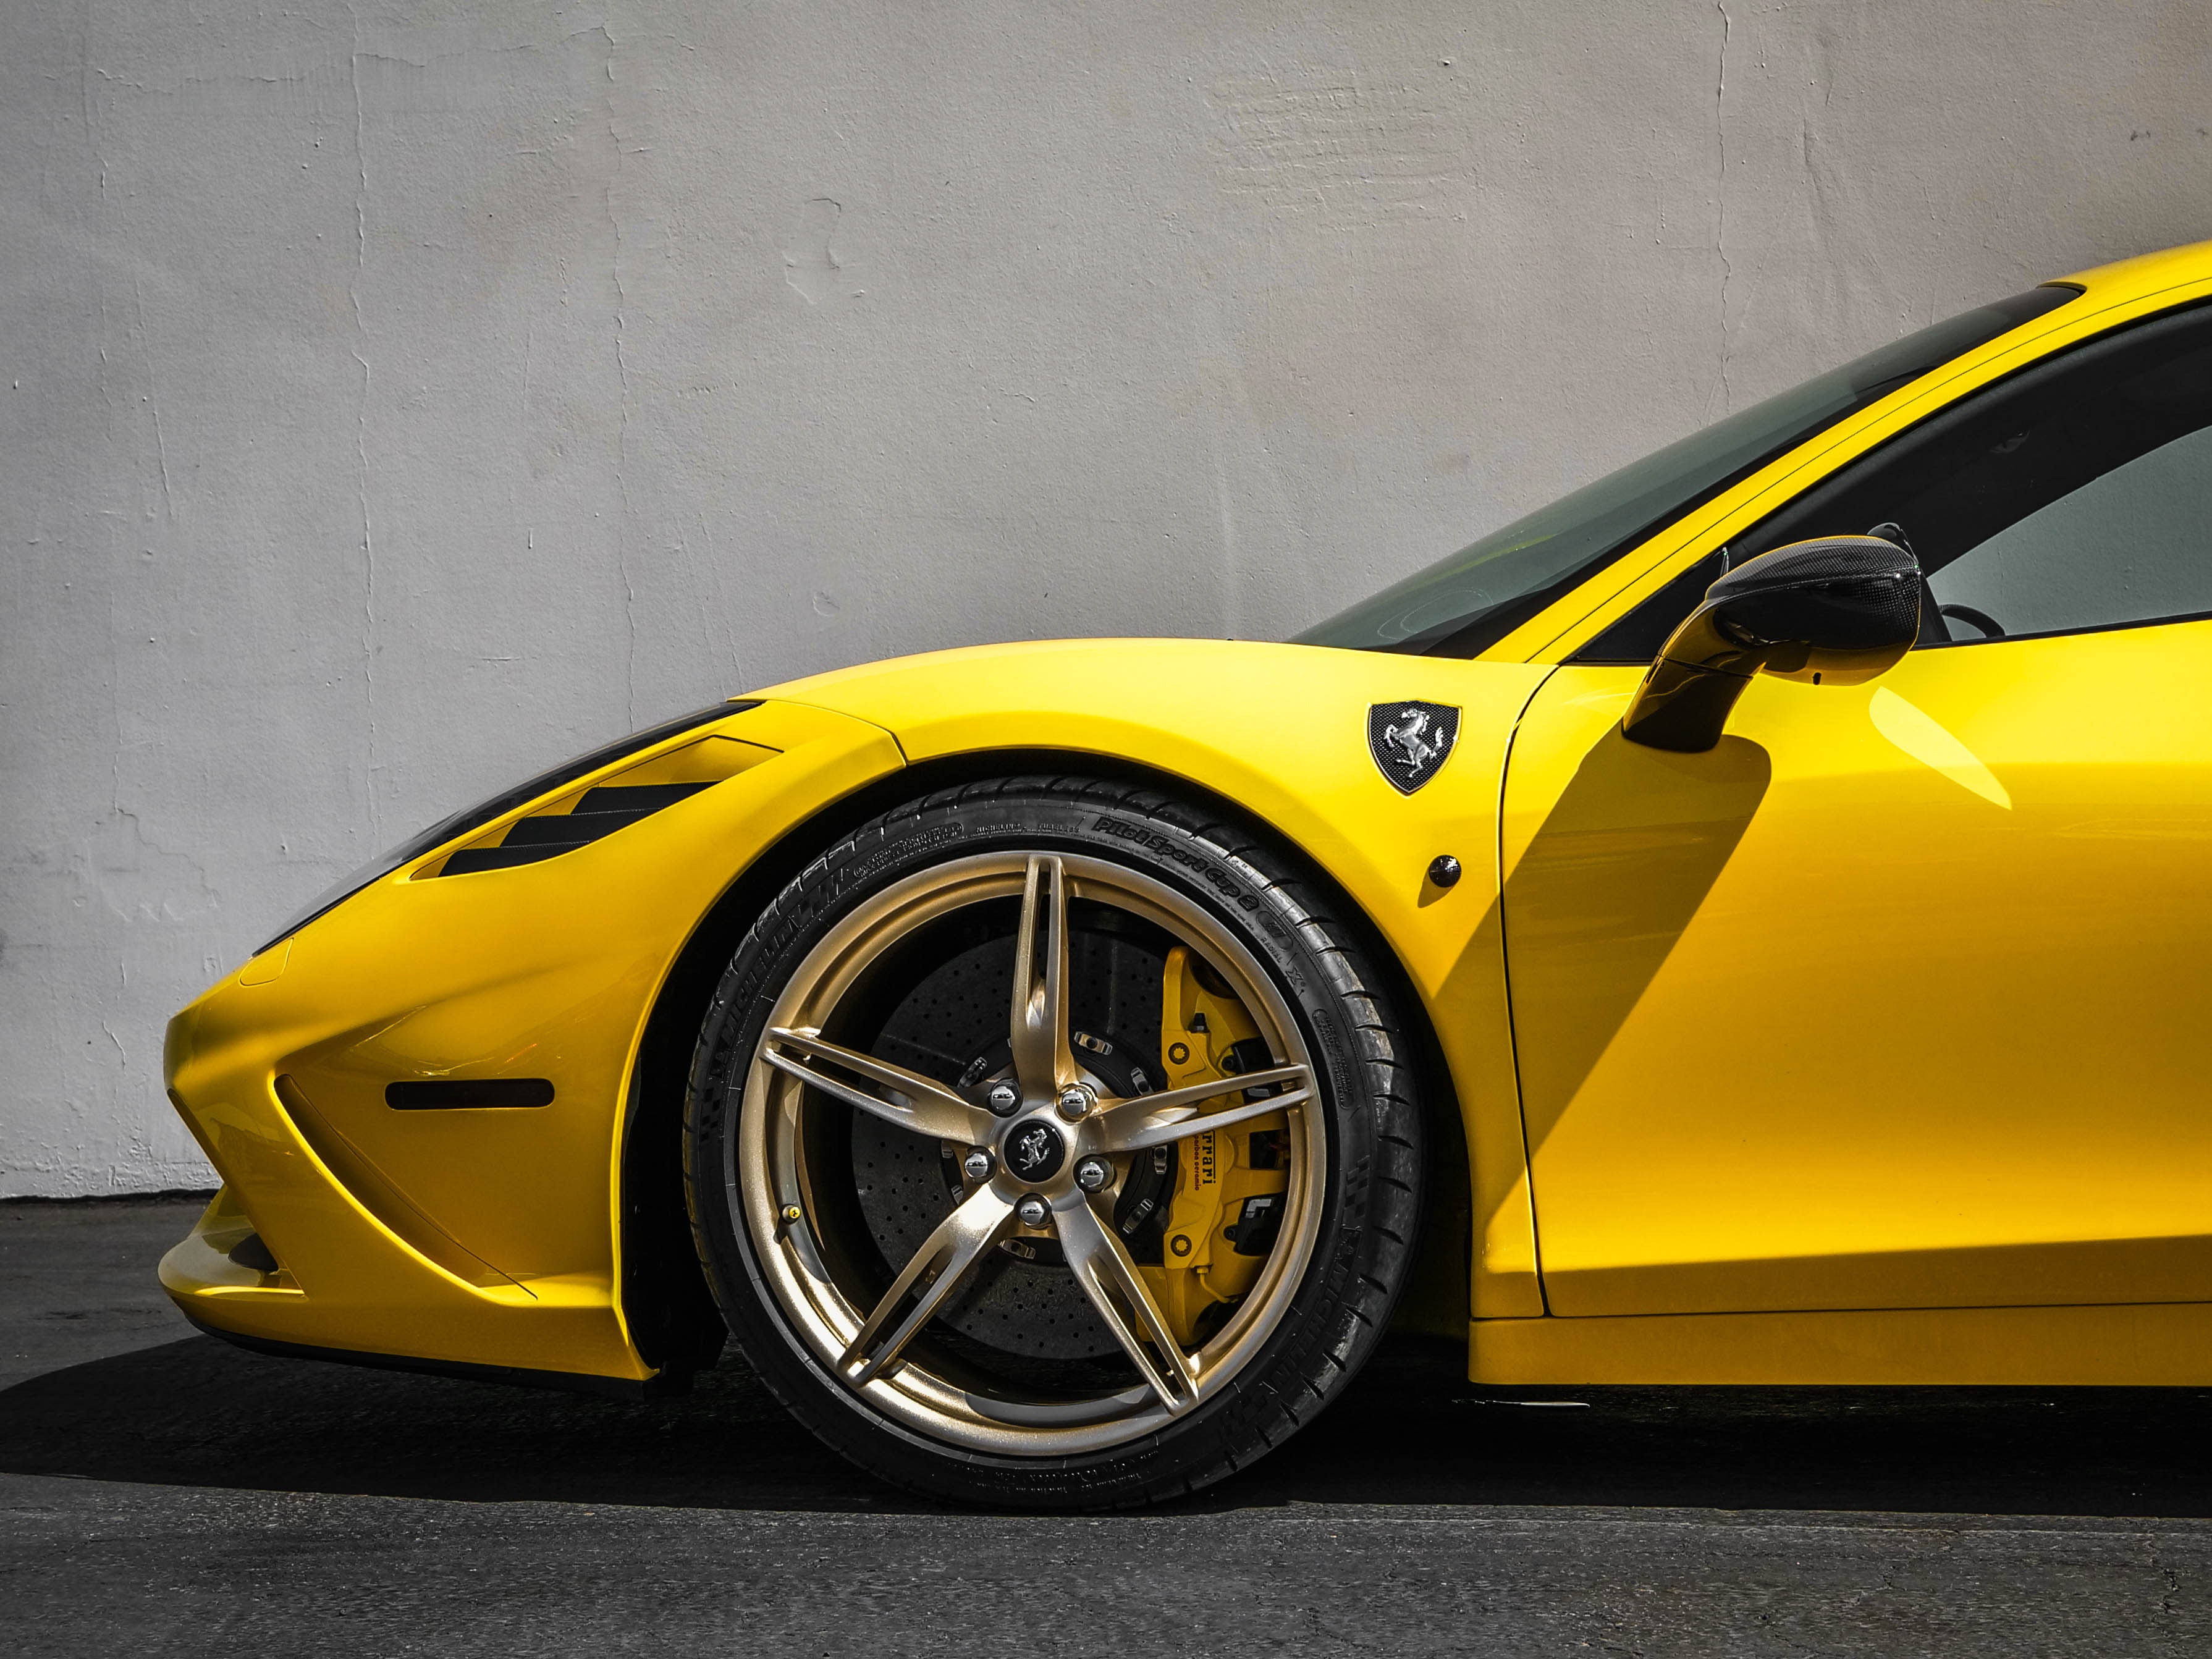 Mũi xe Ferrari màu vàng